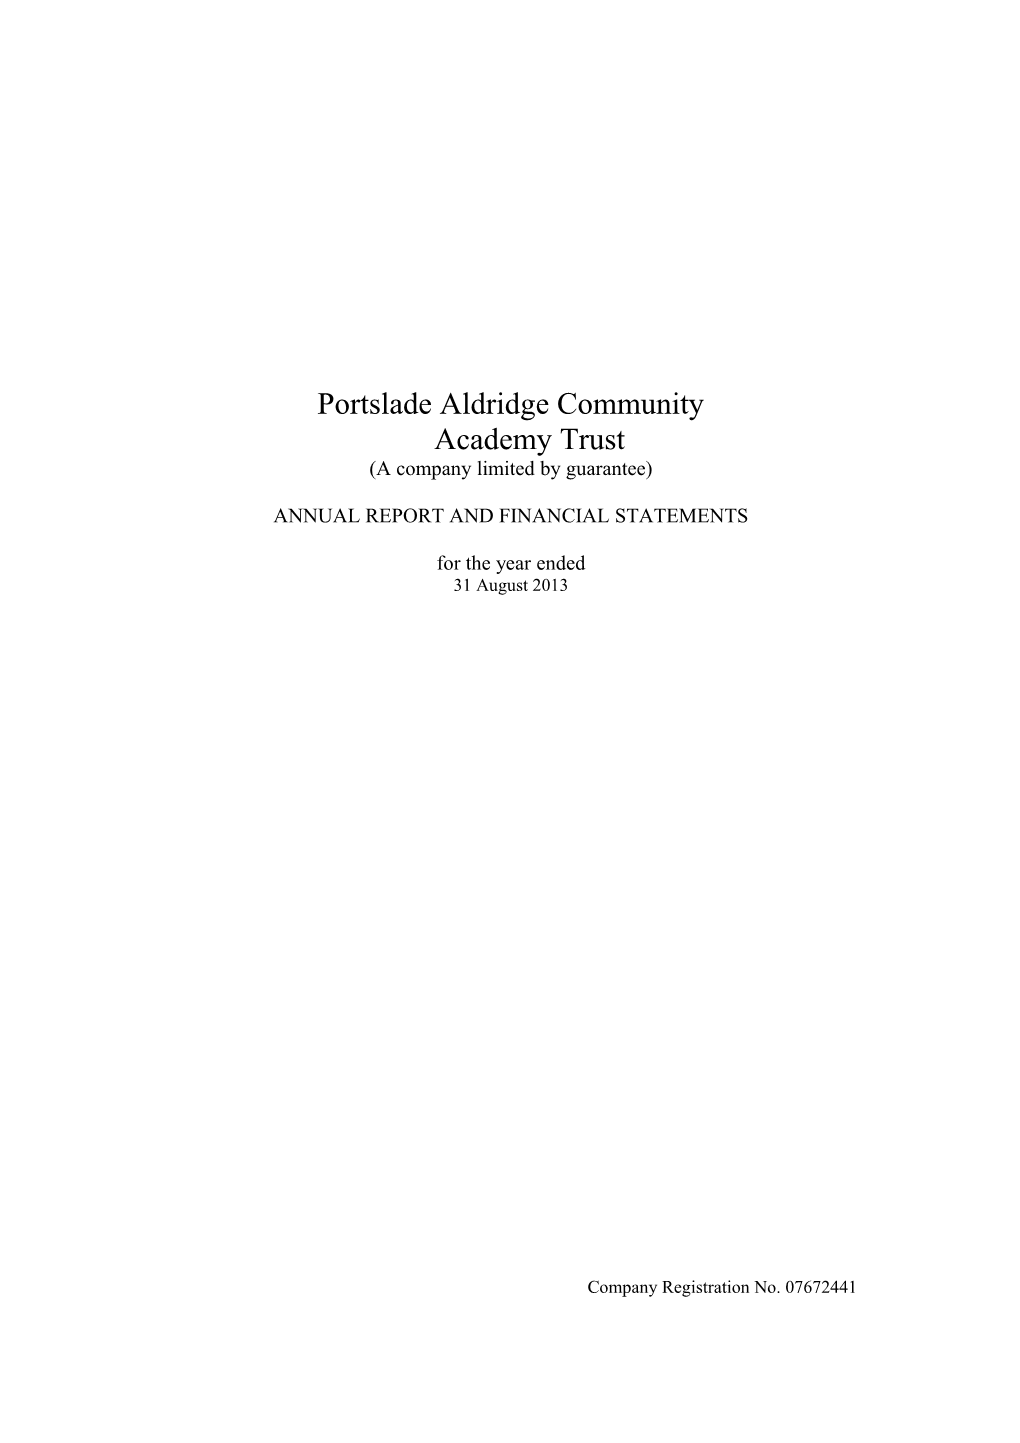 Portslade Aldridge Community Academy Trust